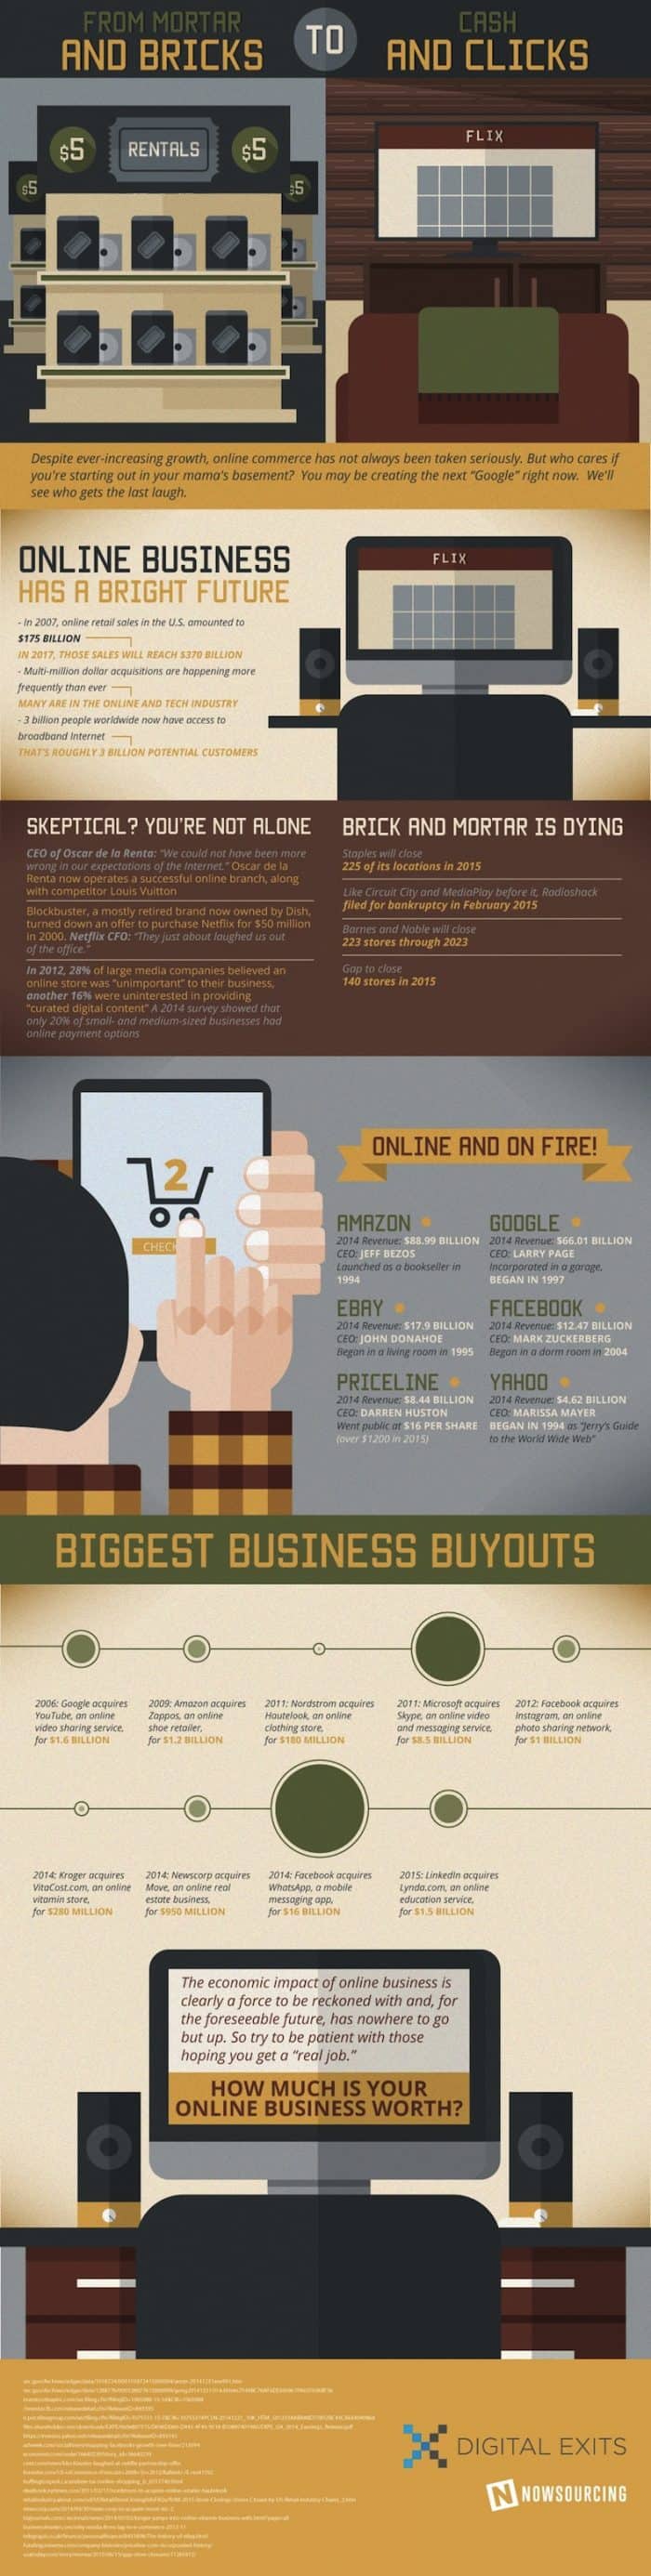 Online Commerce Infographic